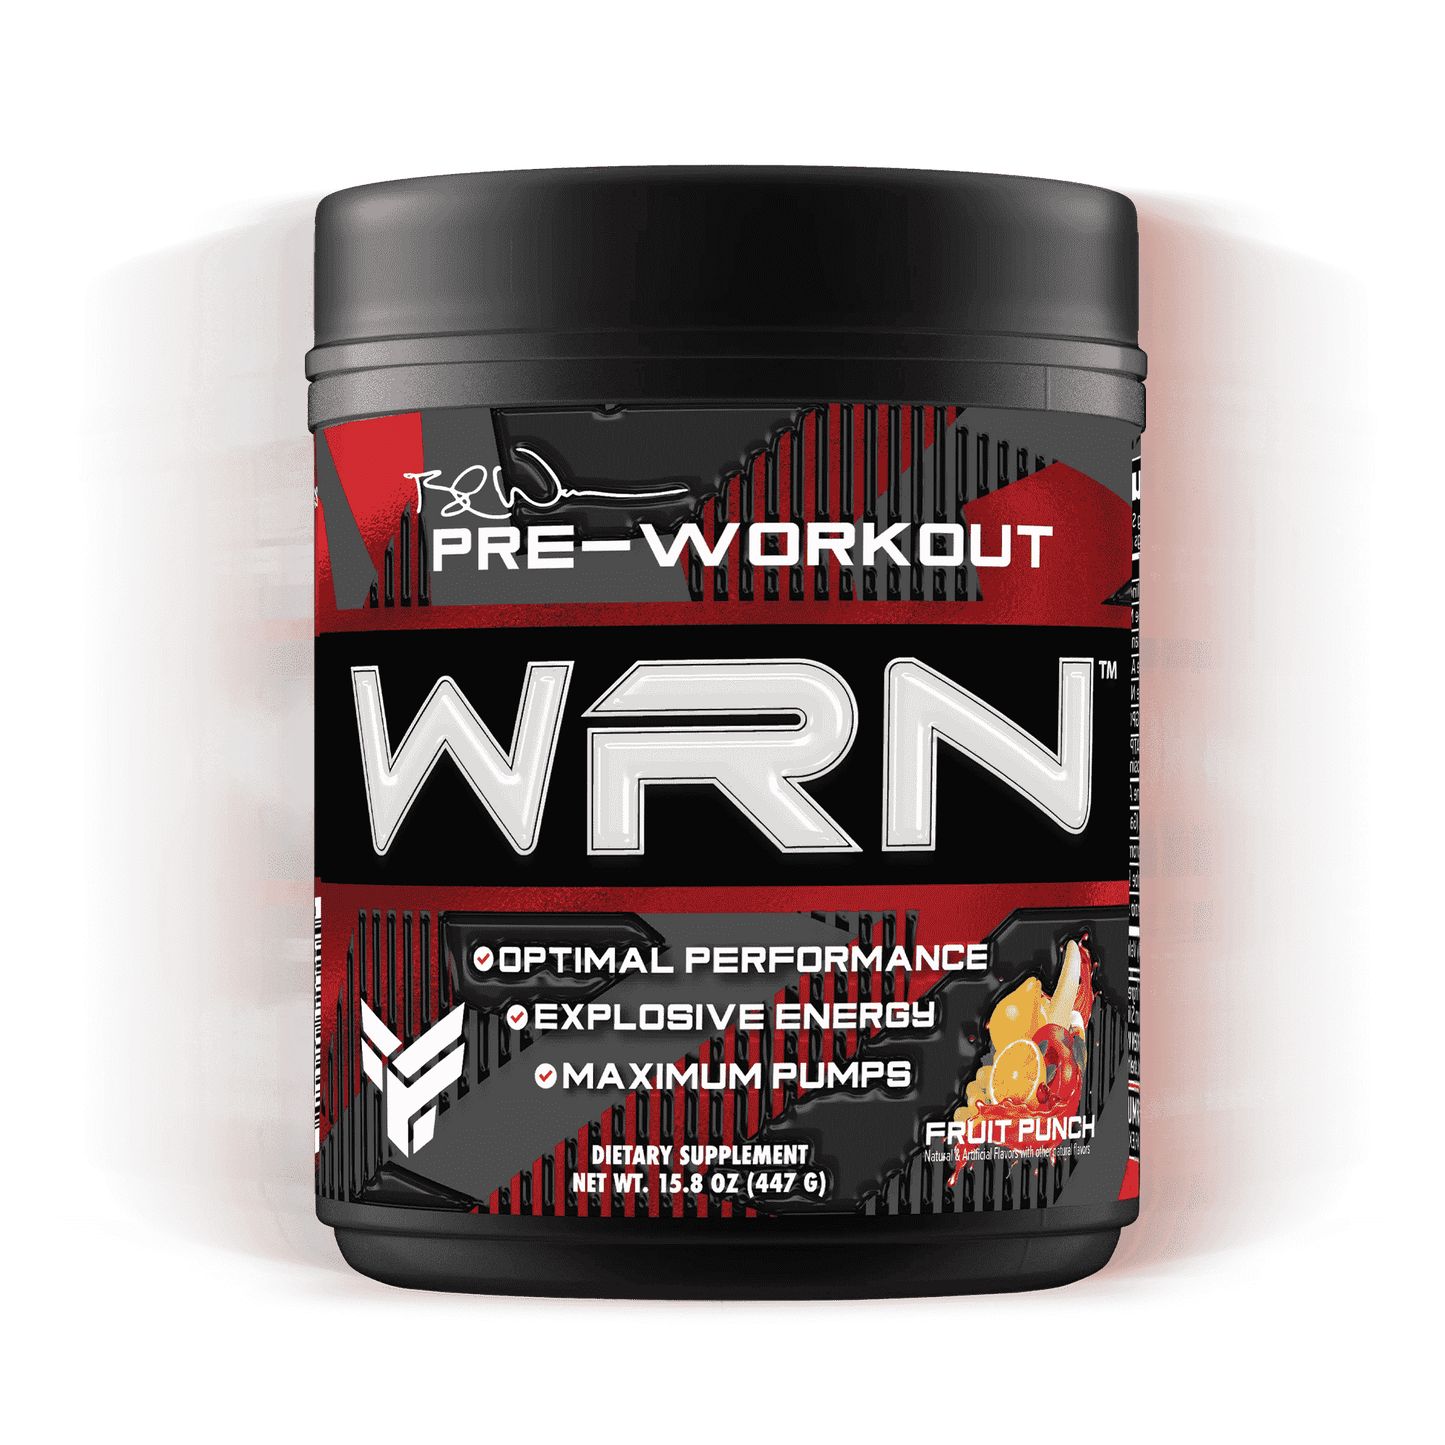 Finaflex WRN Pre-Workout front bottle